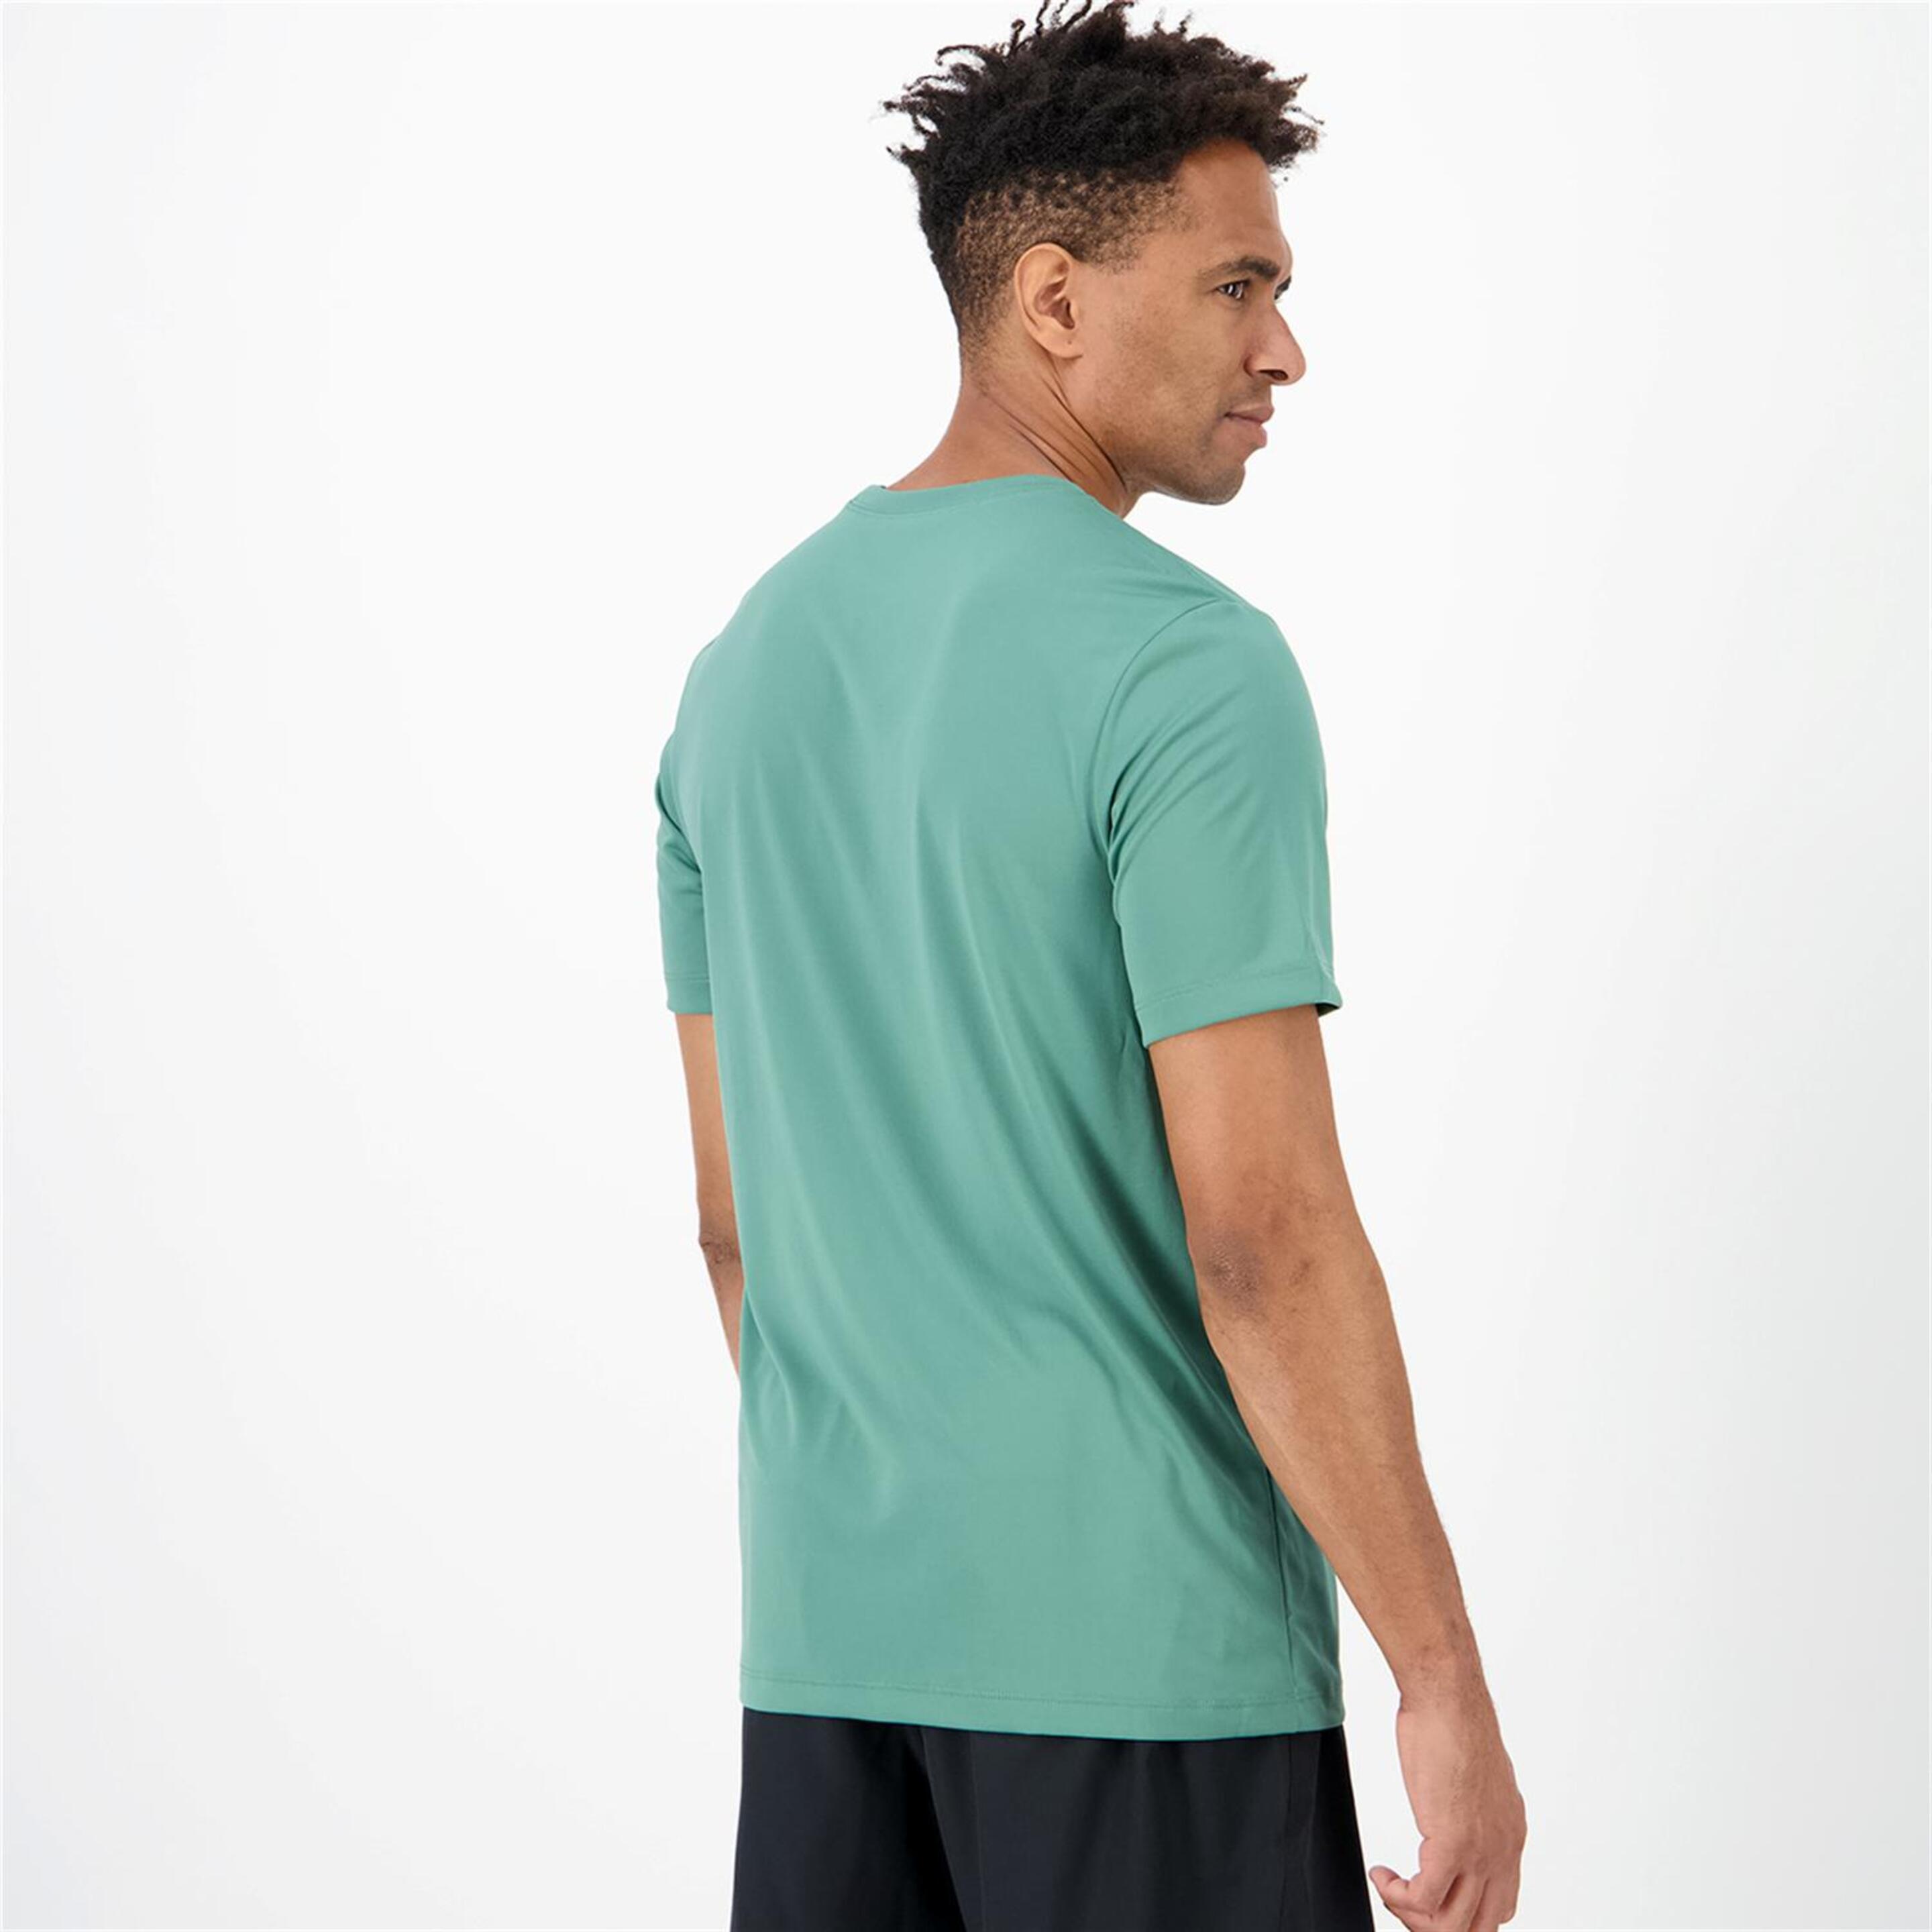 Camiseta Nike - Verde - Camiseta Running Hombre